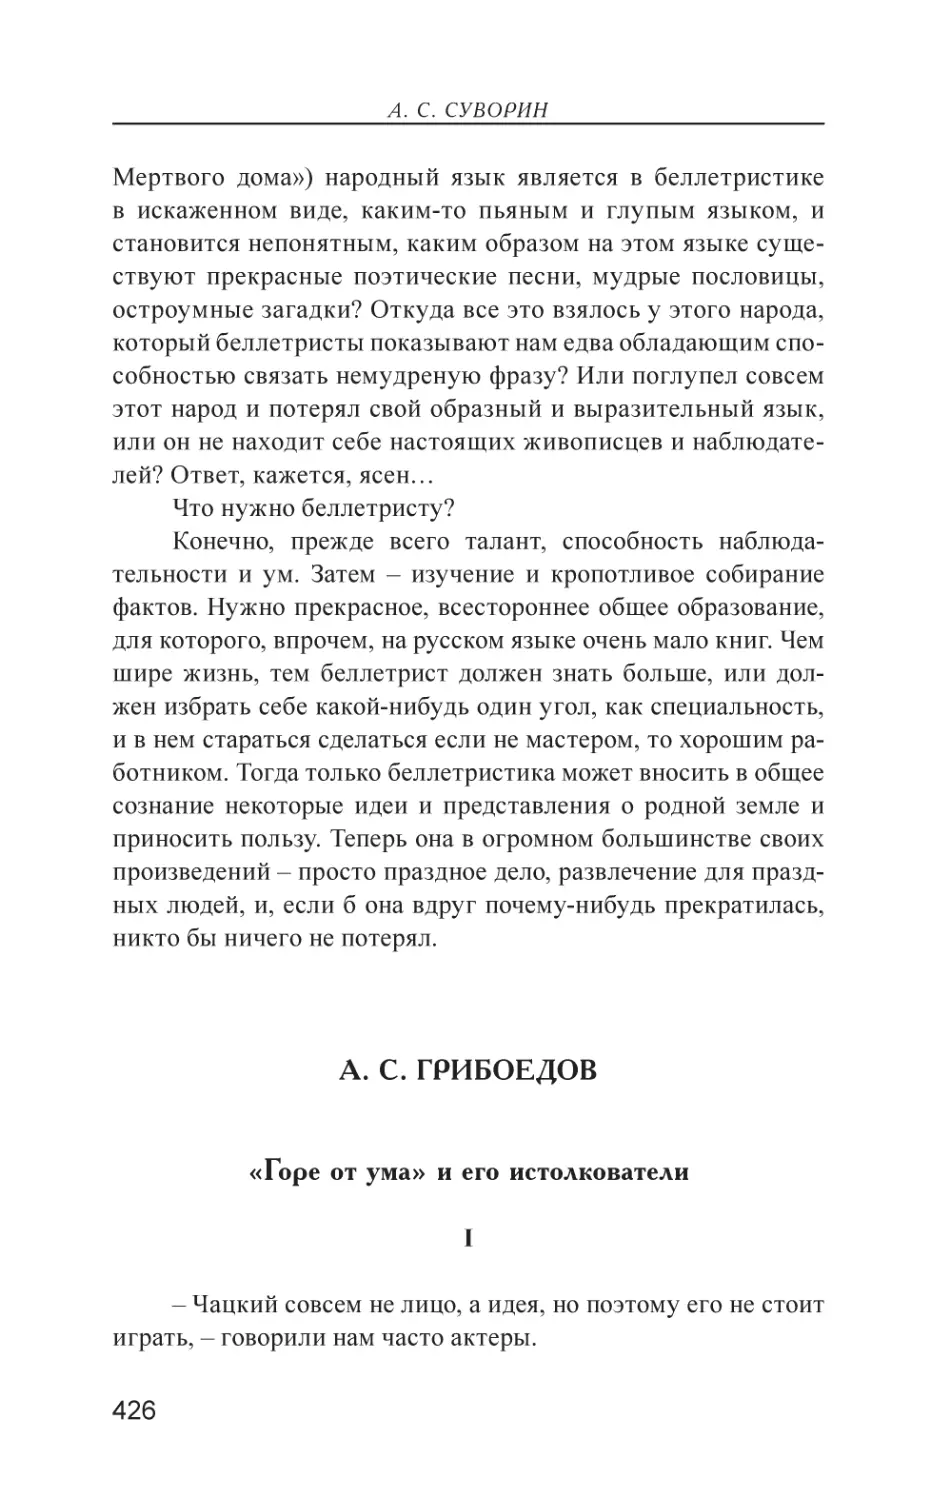 А. С. Грибоедов
«Горе от ума» и его истолкователи